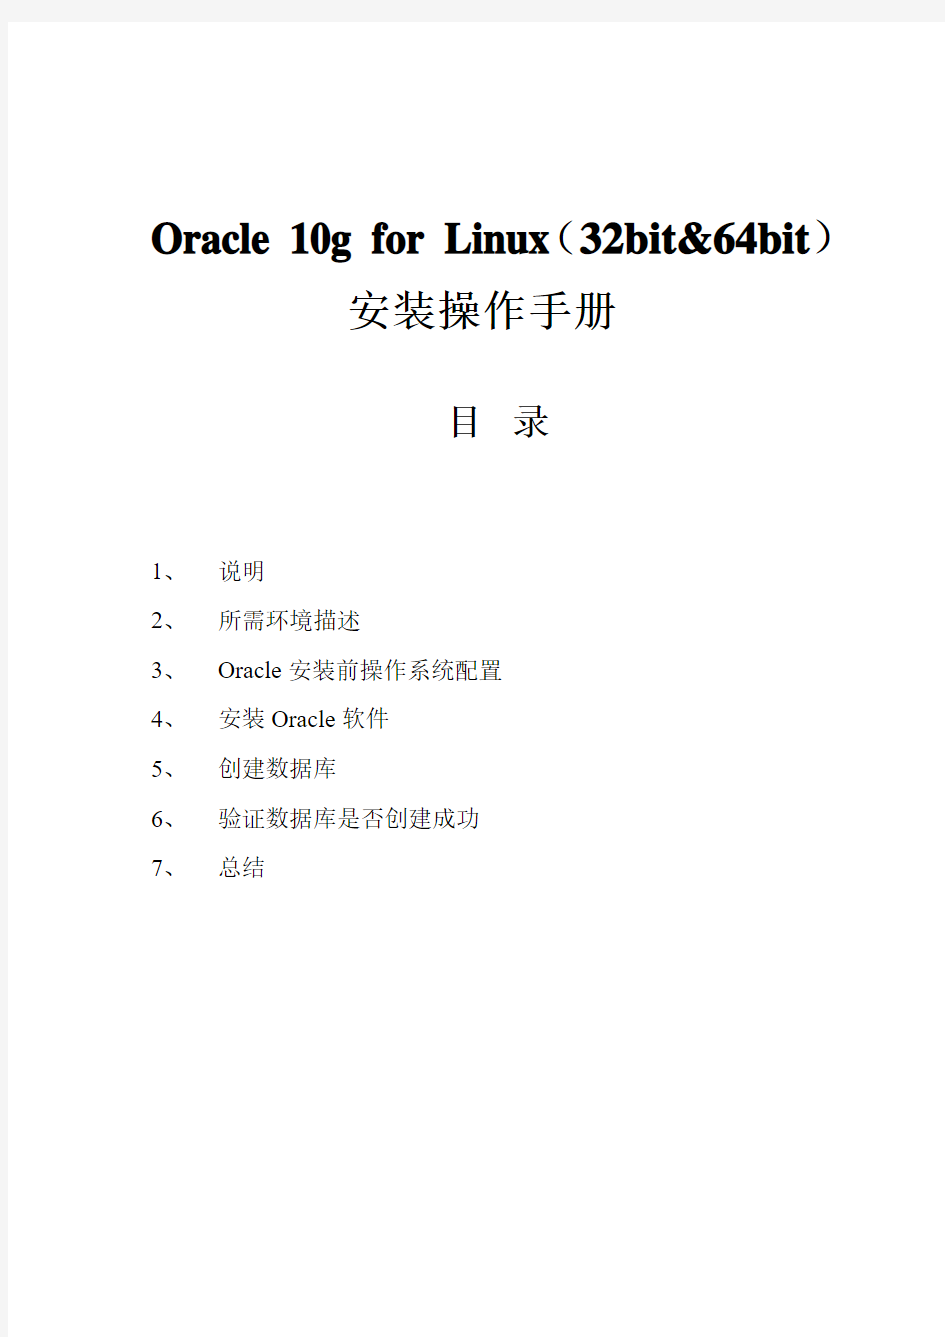 Oracle 10g for Linux(32bit&64bit)安装操作手册